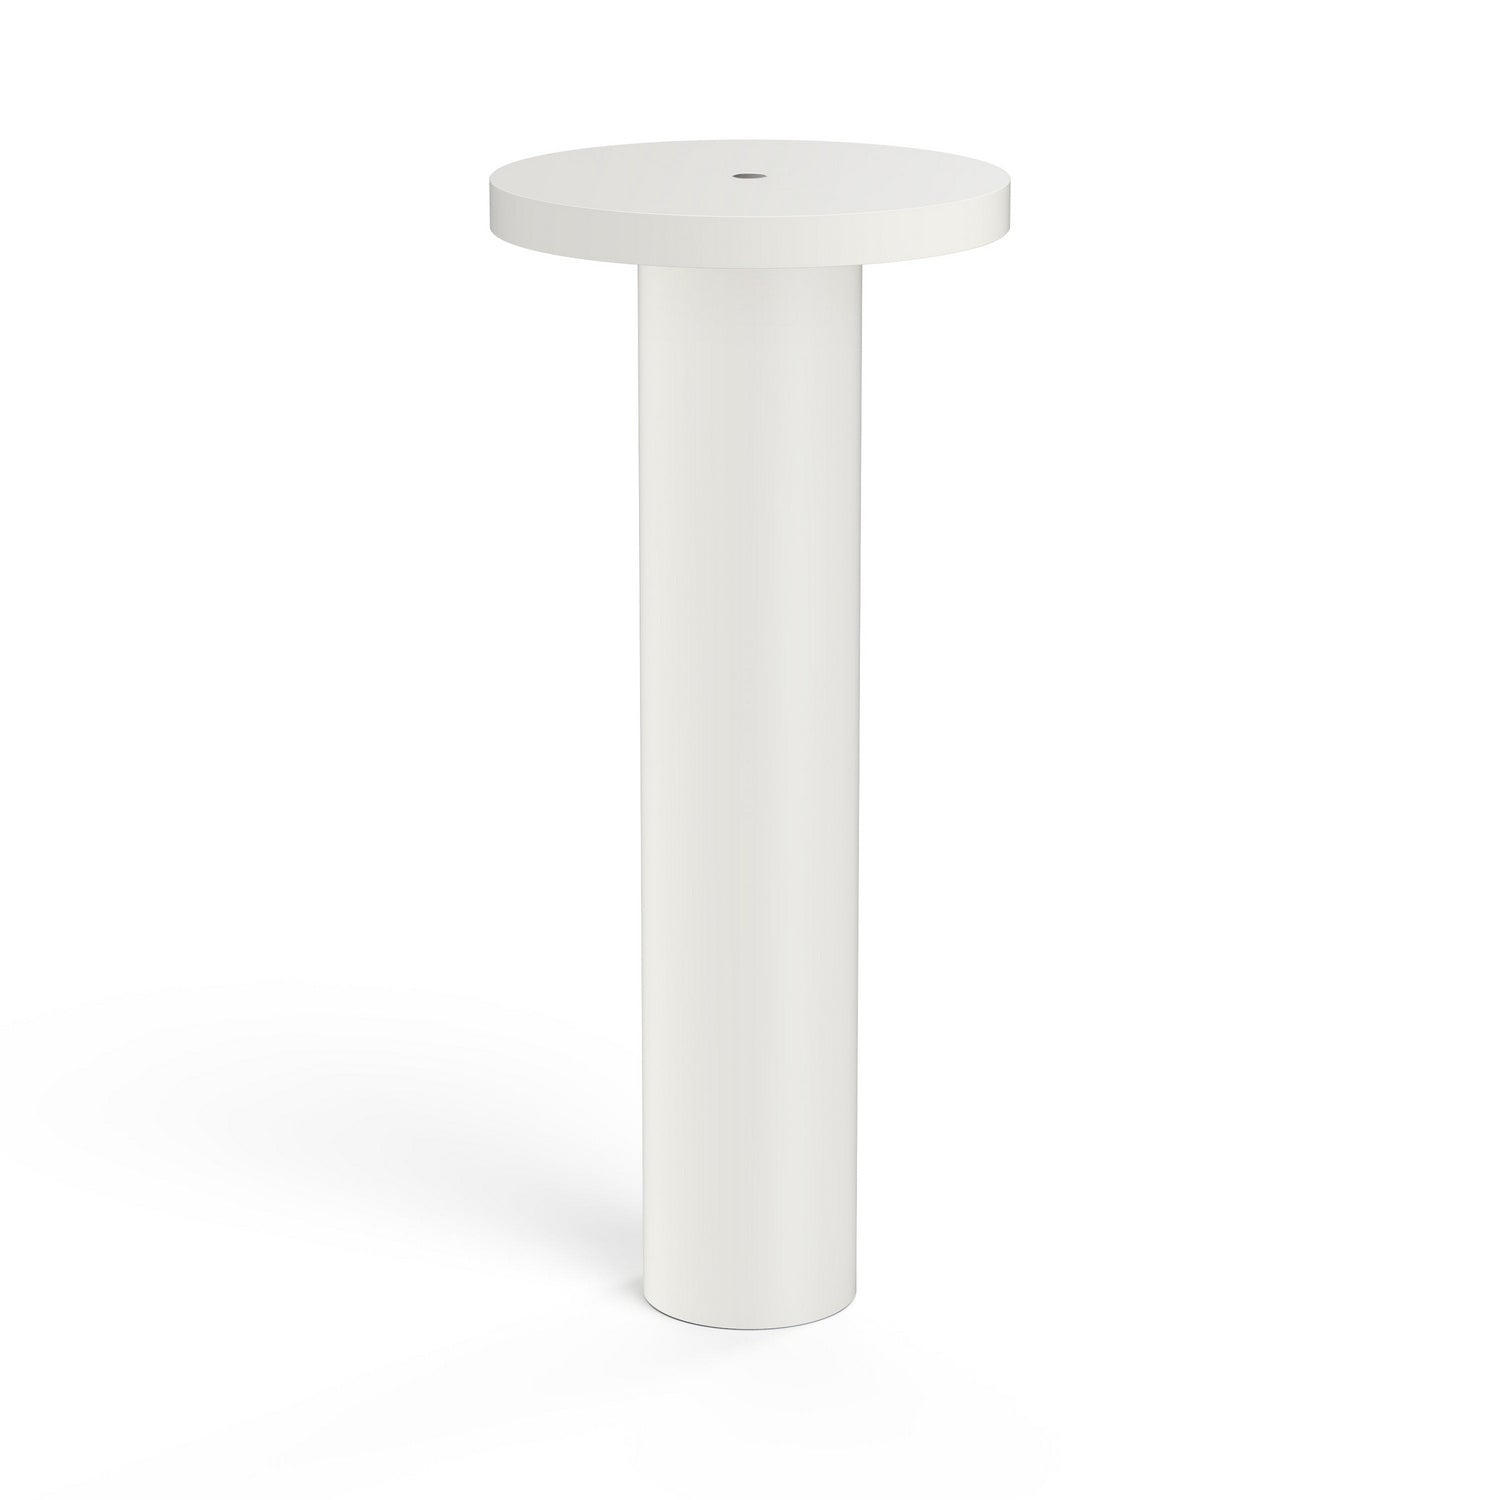 Pablo Designs - LED Table Lamp - LUCI - White- Union Lighting Luminaires Decor